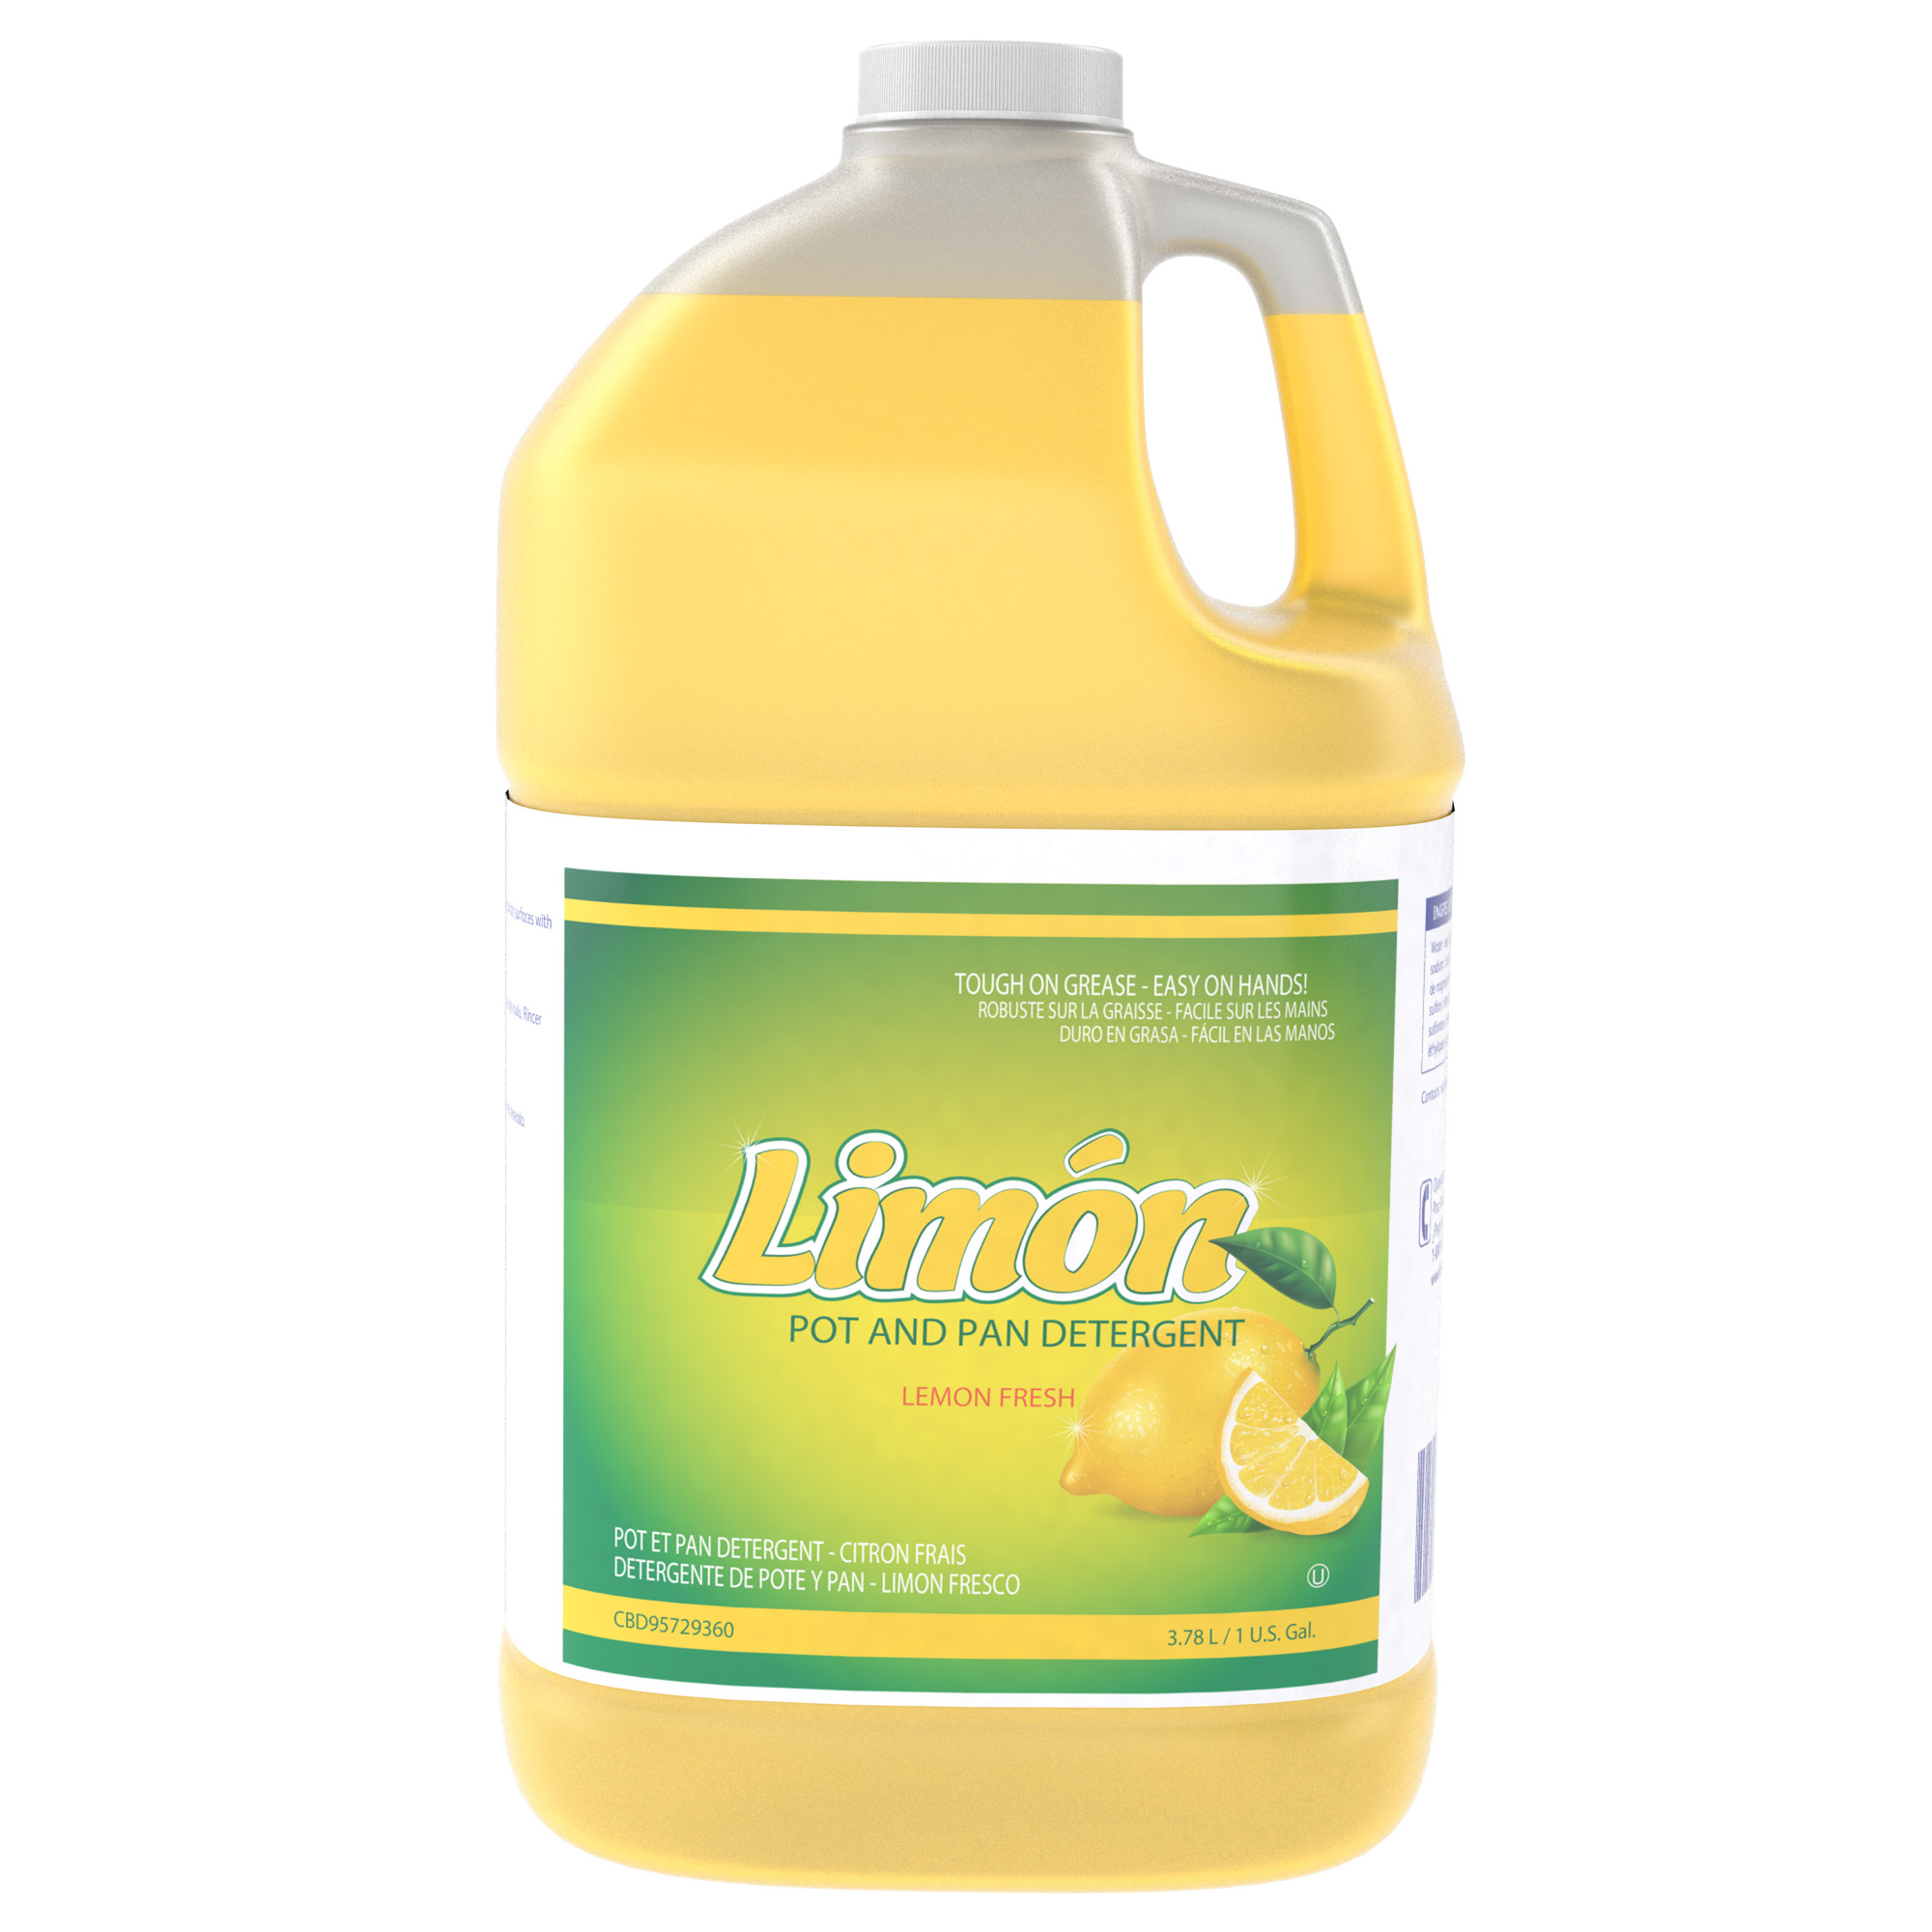 CBD95729360_Limon_Pot_and_Pan_Detergent_1Gal_Front